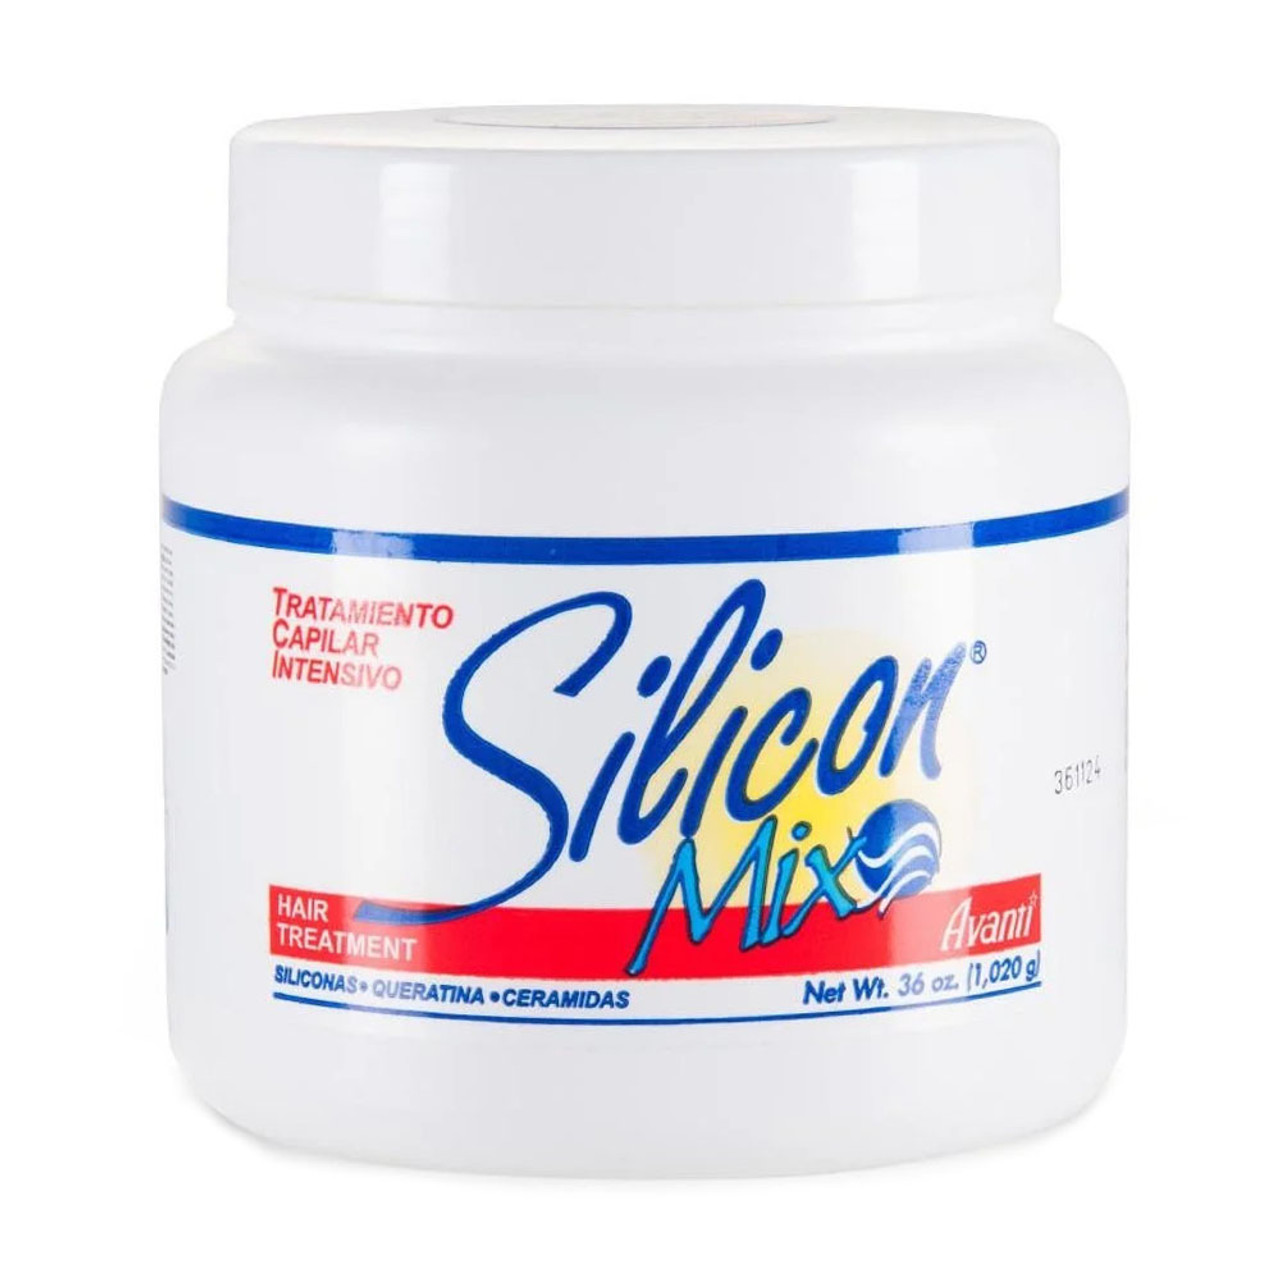 Silicon Mix Intensive Hair Deep Treatment (36 oz.)